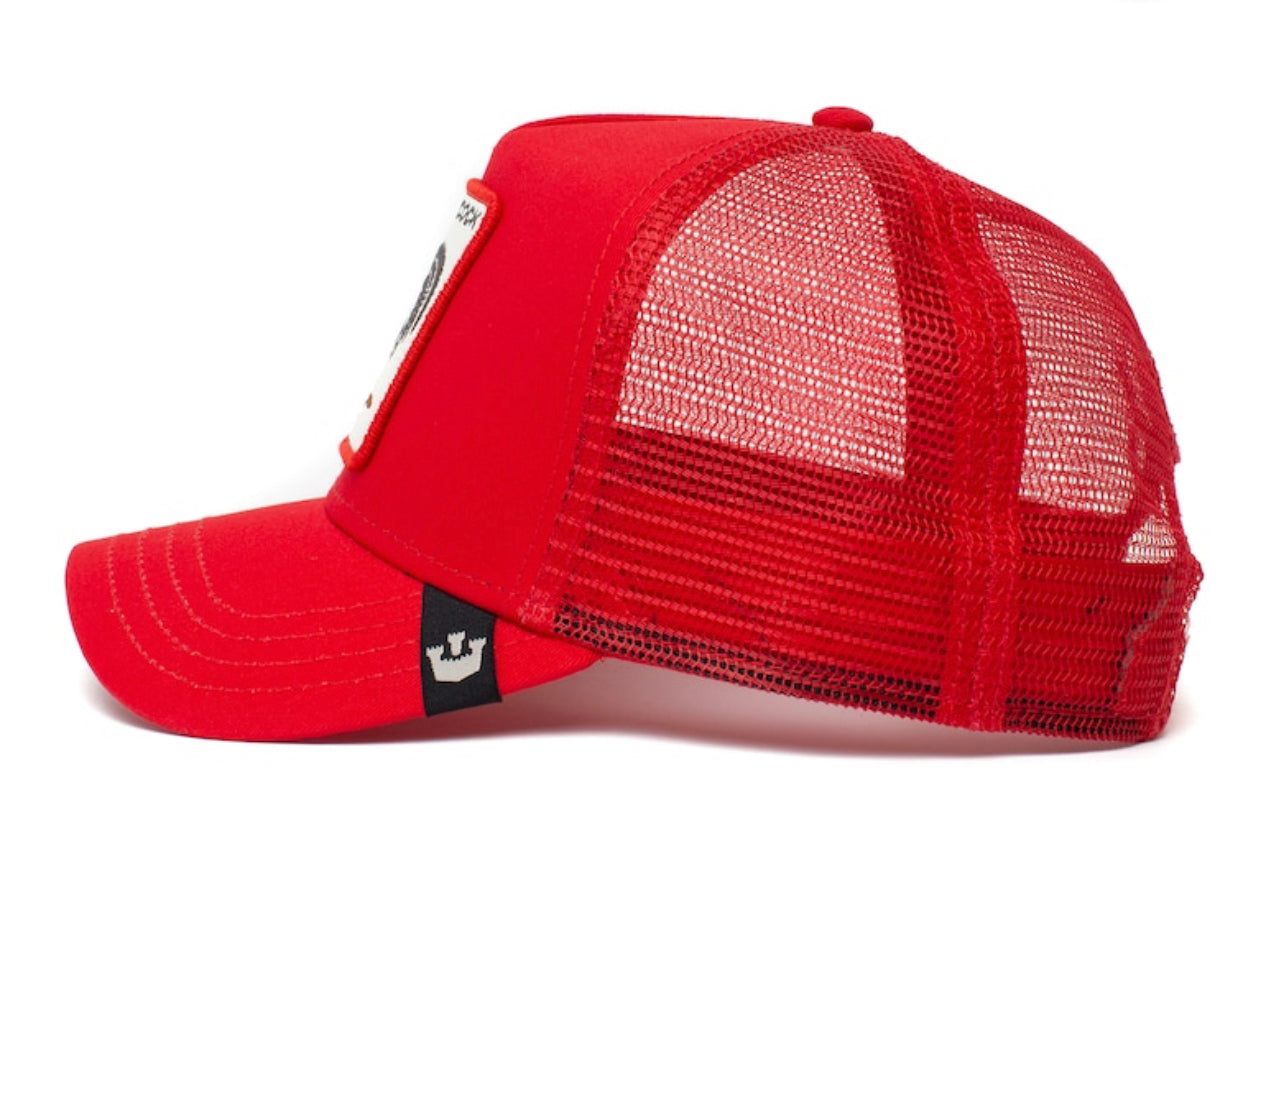 Goorin Bros.Trucker Hat The Cock RED